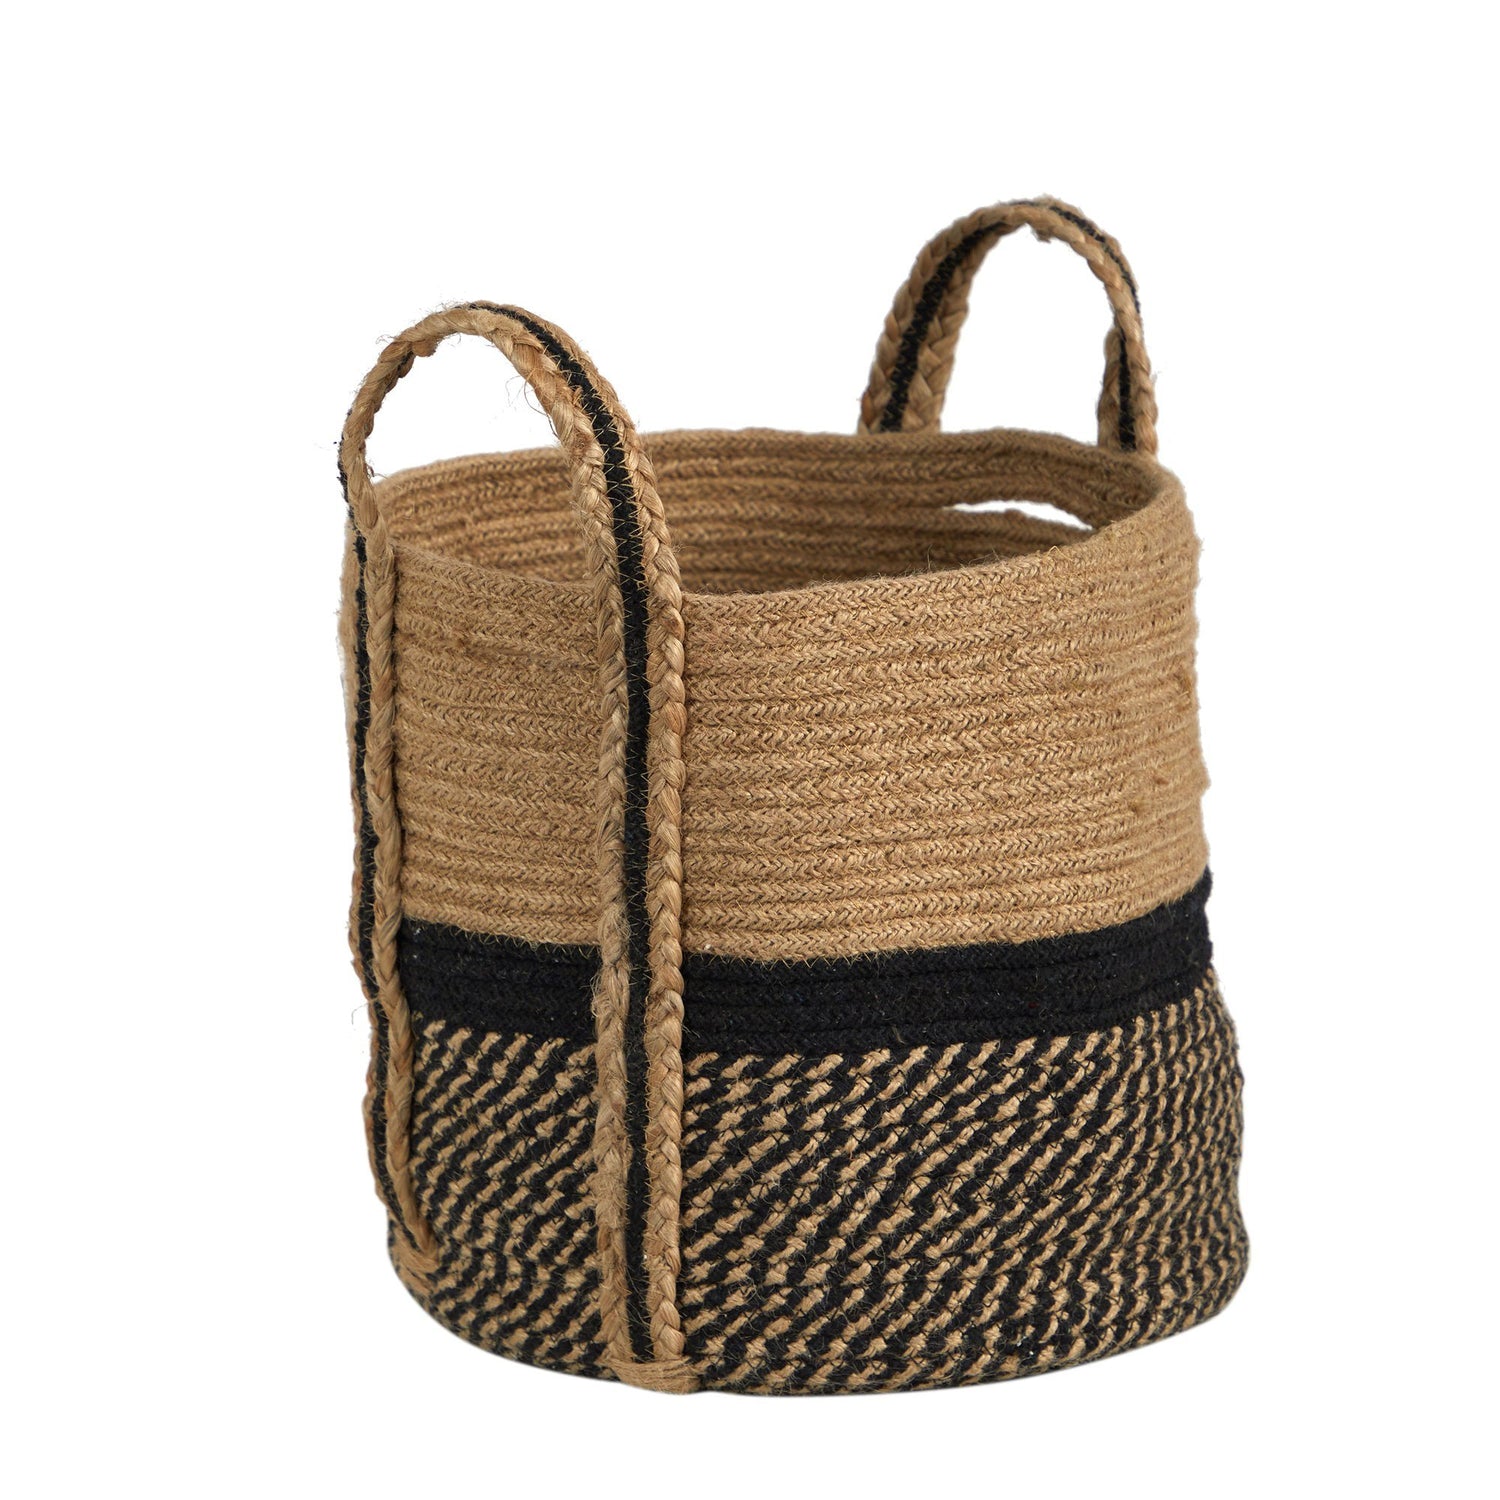 13" Boho Chic Basket Natural Jute Basket Planter, Black Bottom Natural Top with Handles"